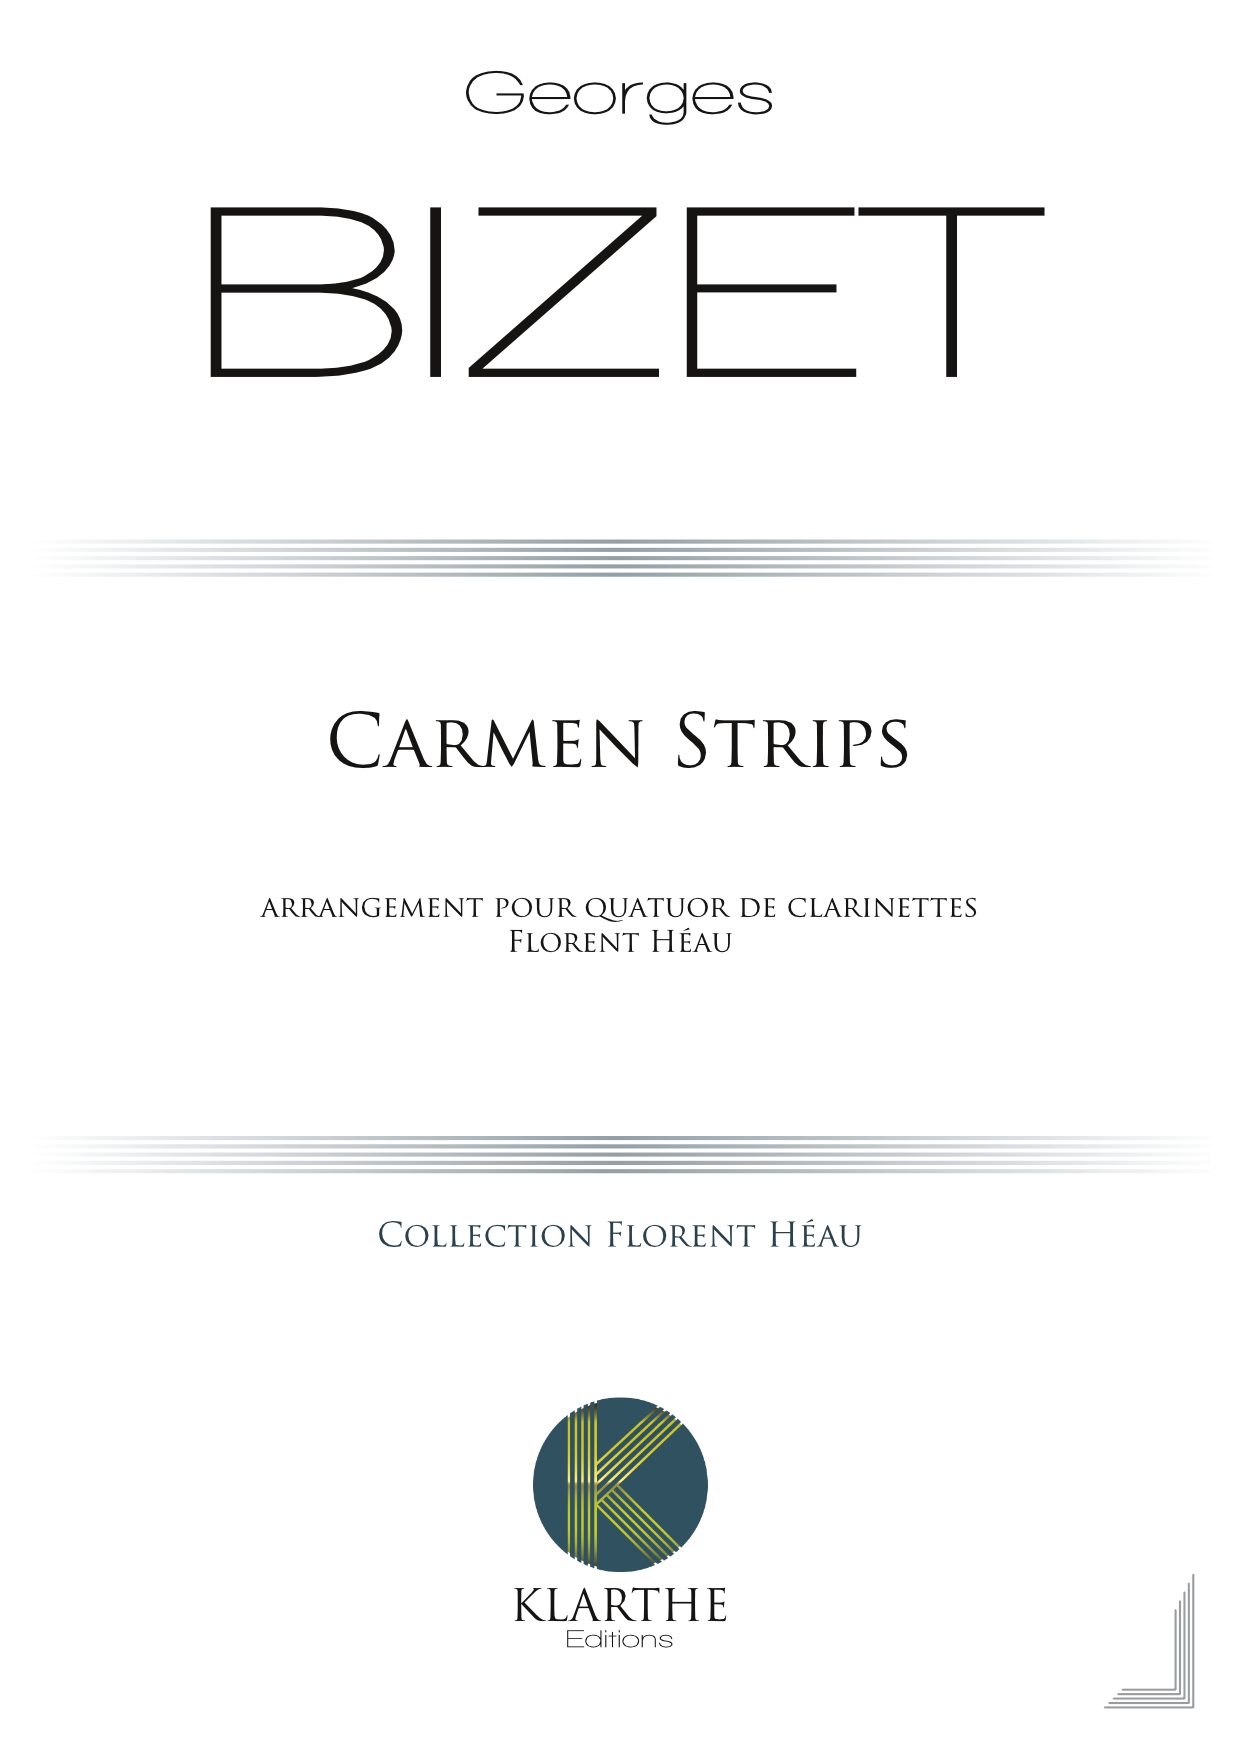 Carmen strips (BIZET GEORGES)